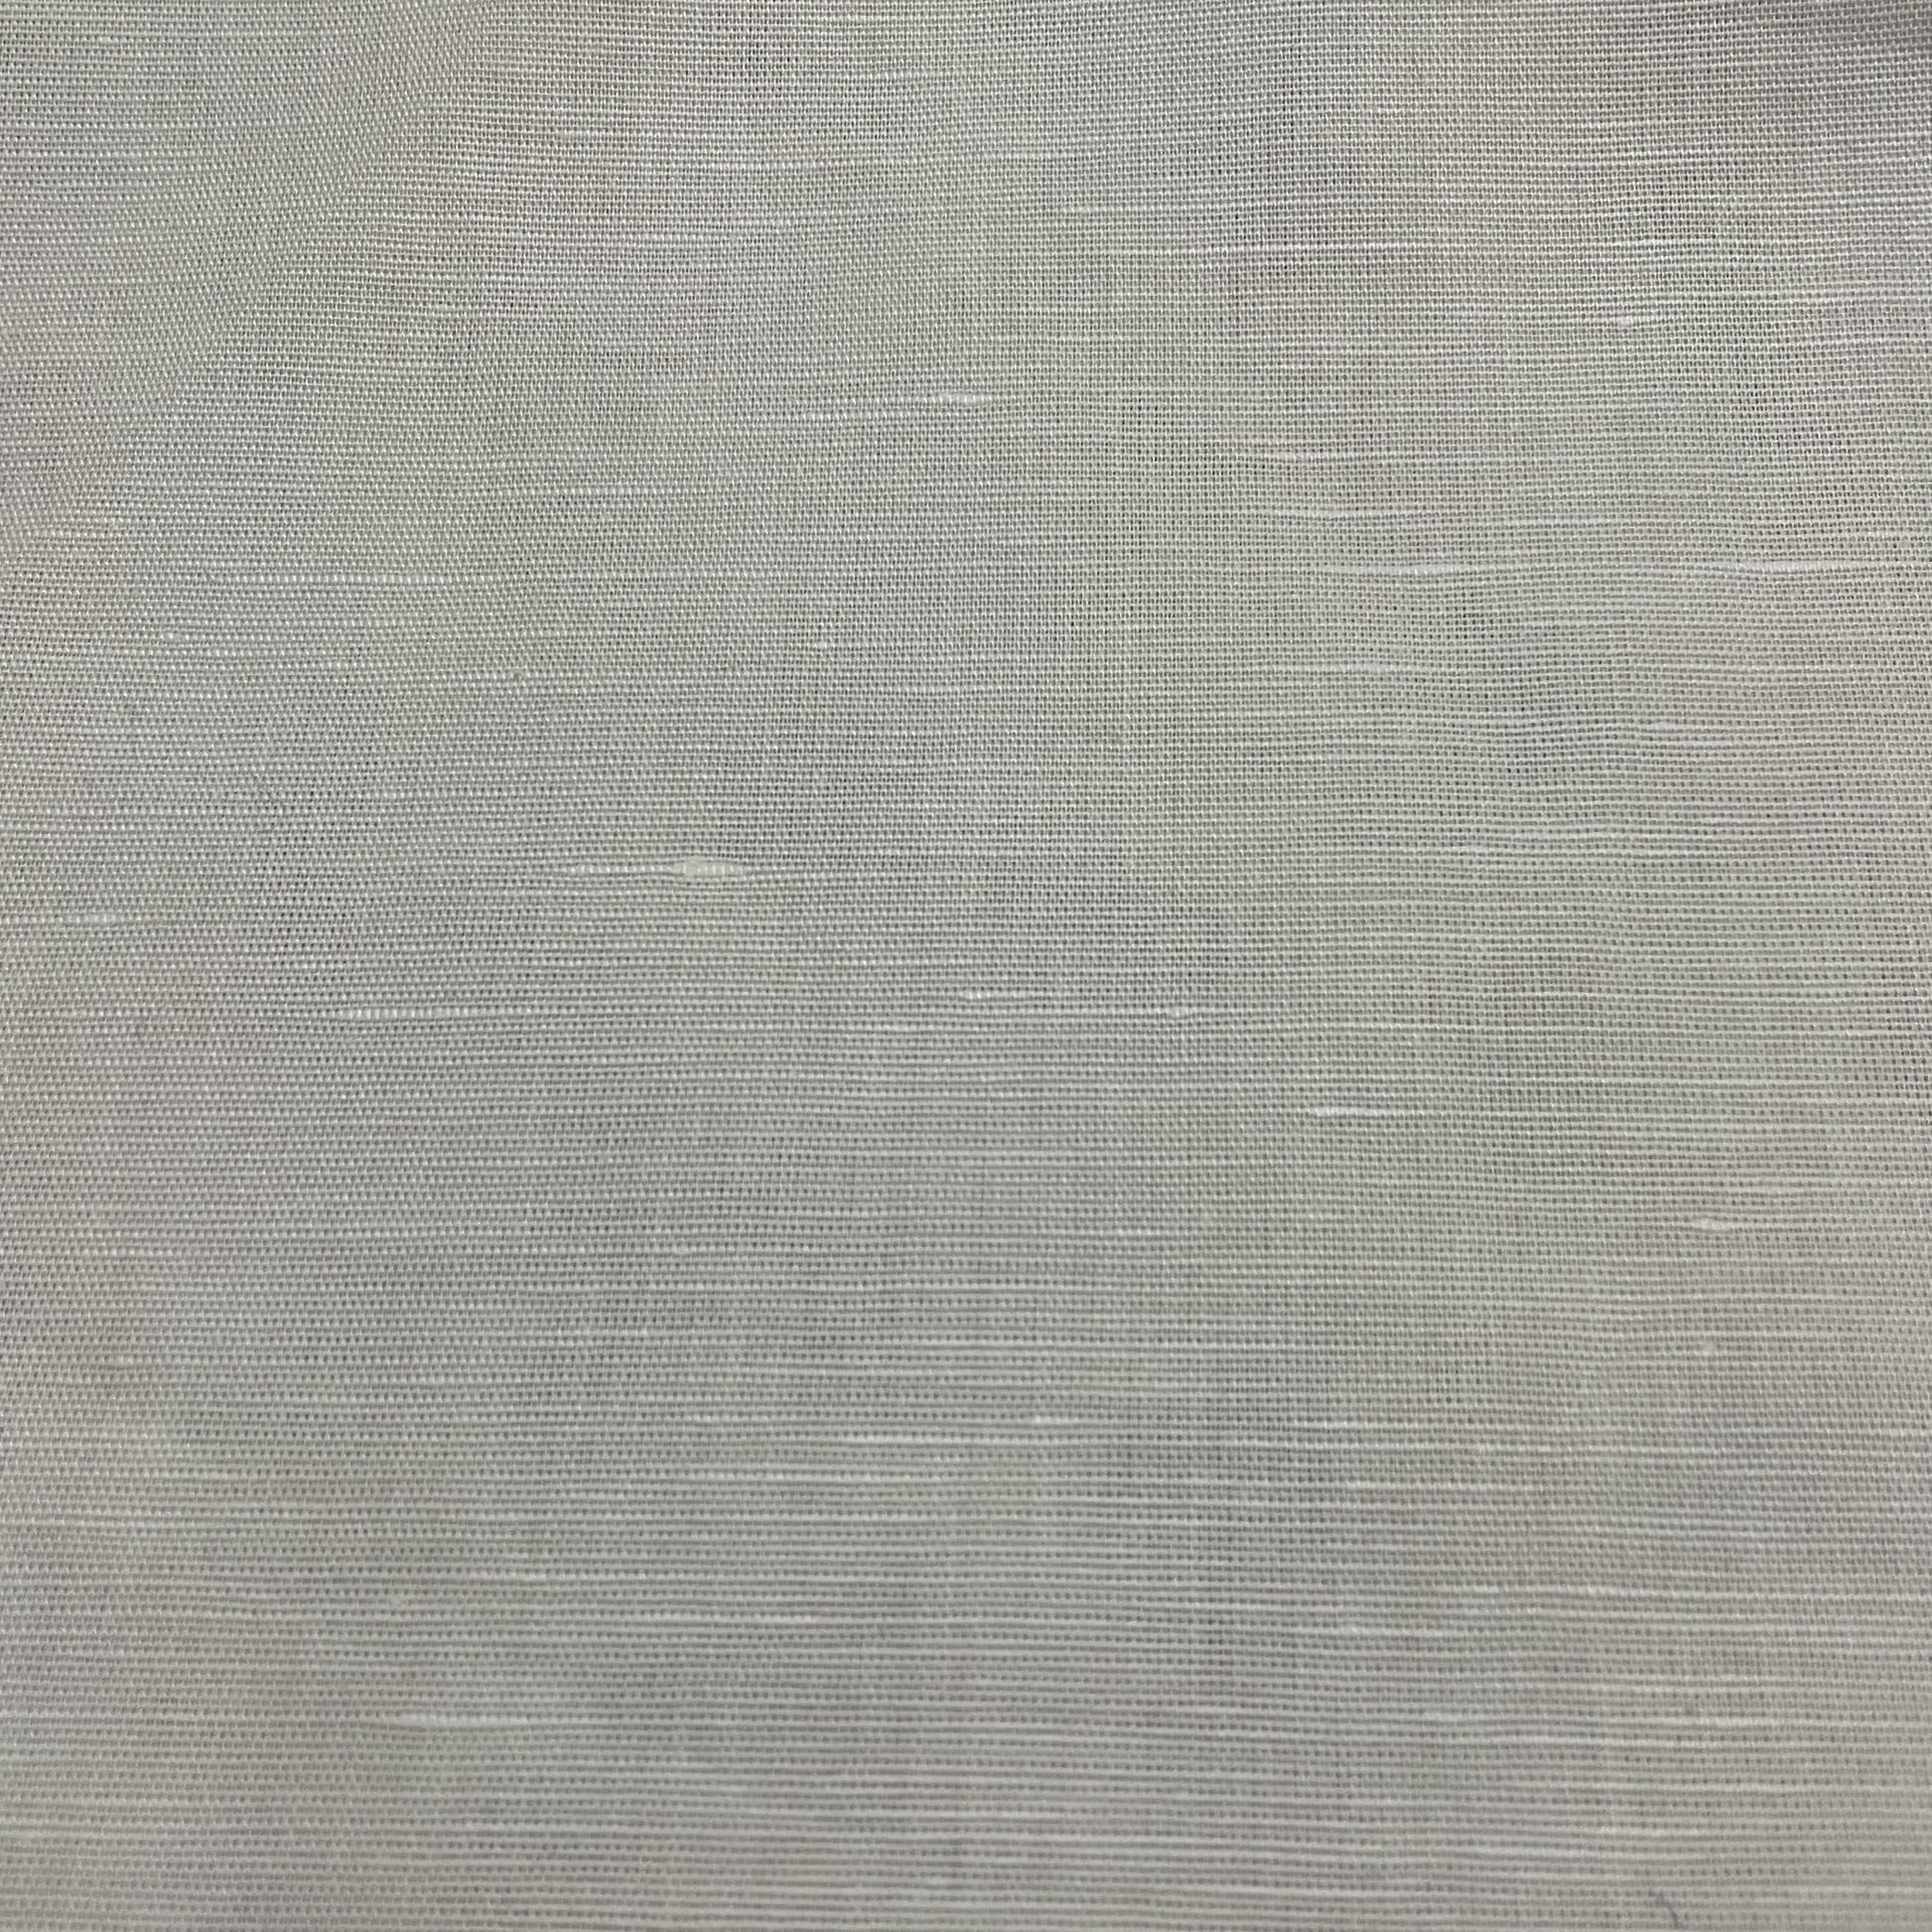 Cream Solid Cotton Linen Fabric